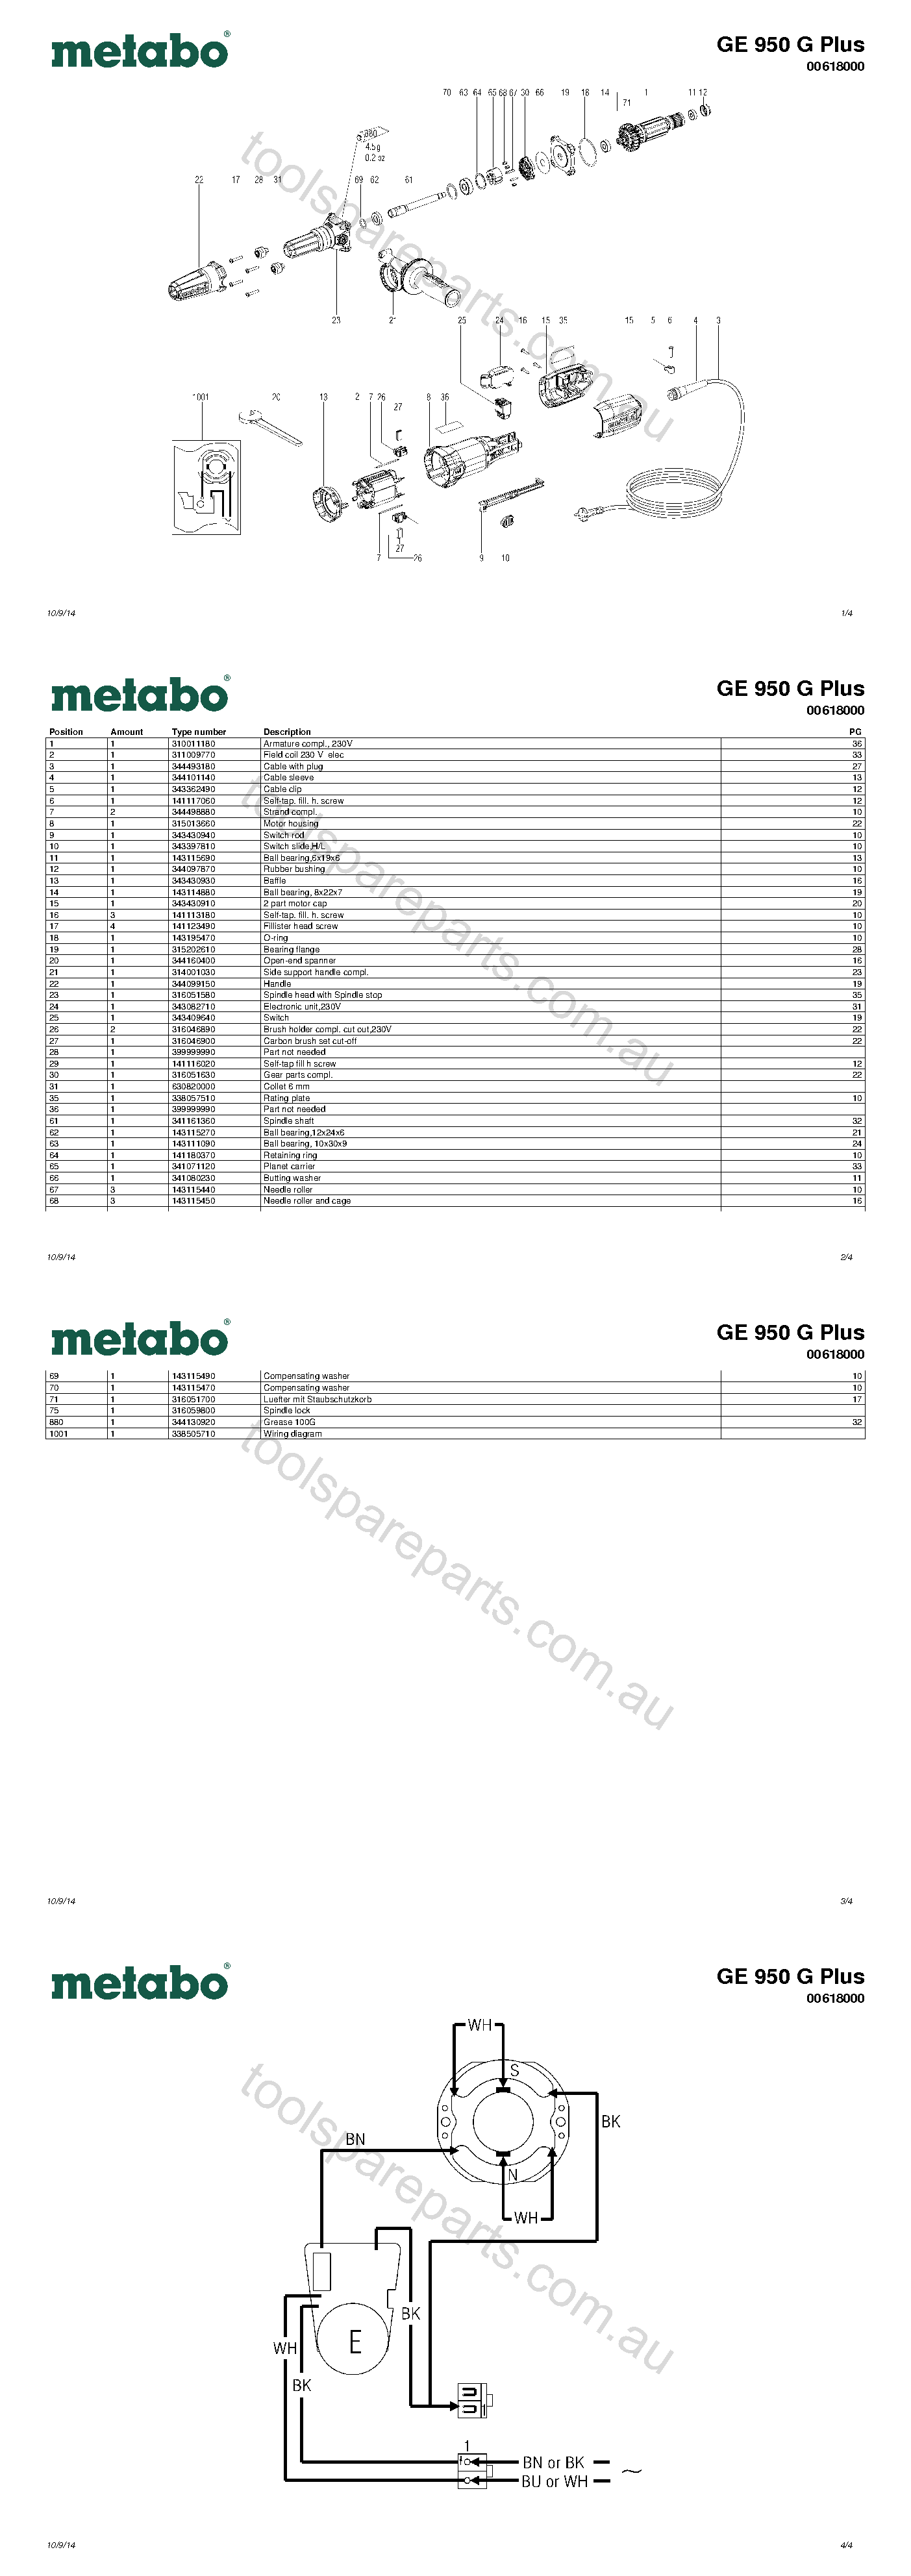 Metabo GE 950 G Plus 00618000  Diagram 1